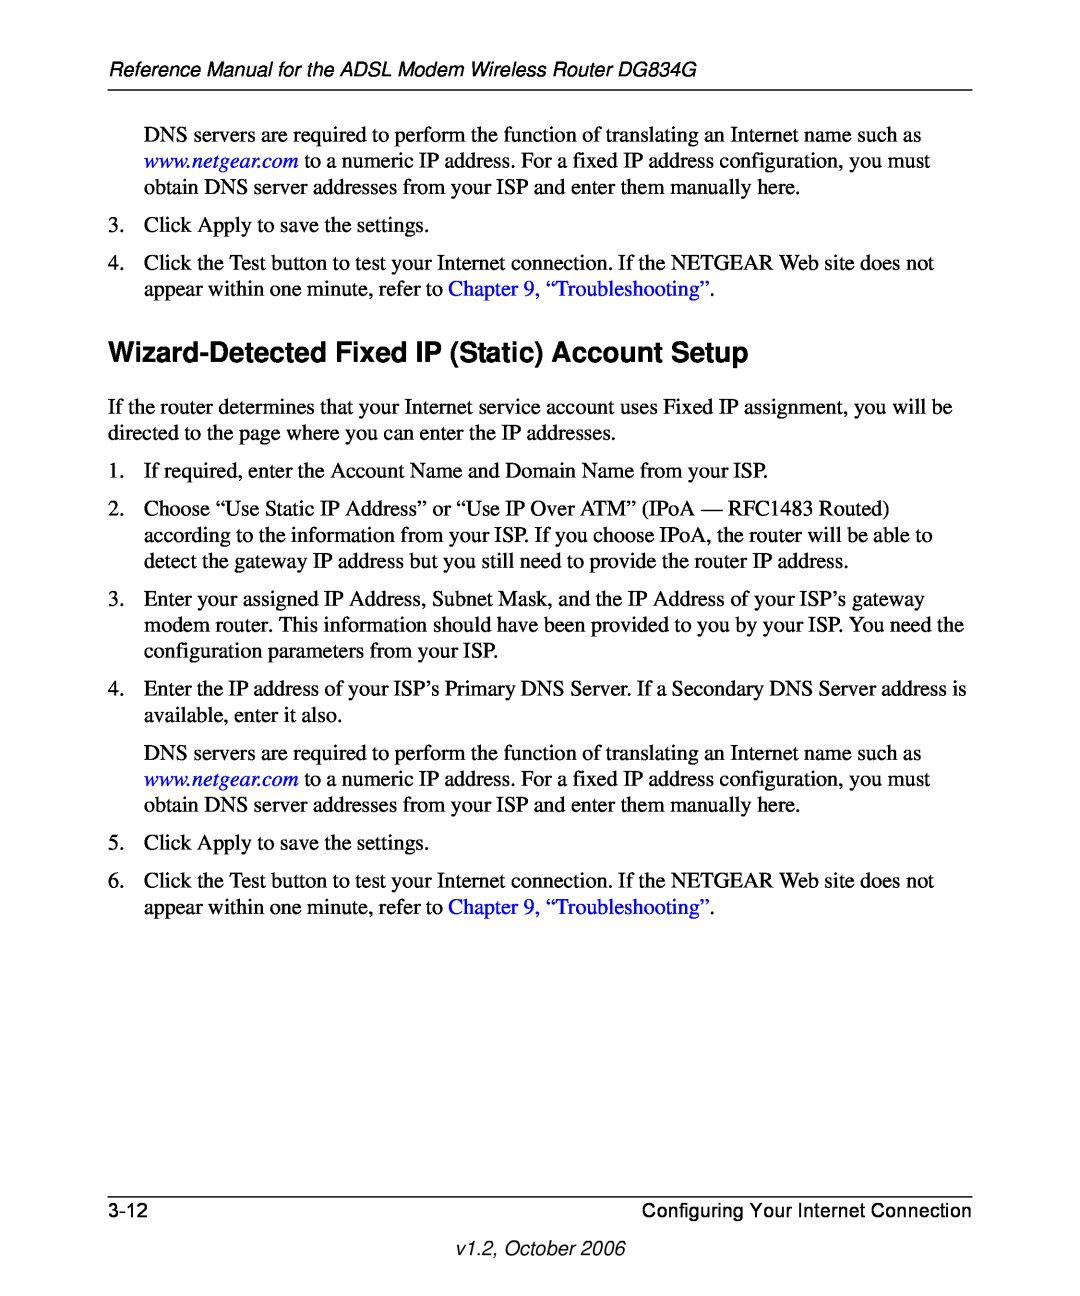 NETGEAR DG834G manual Wizard-Detected Fixed IP Static Account Setup 